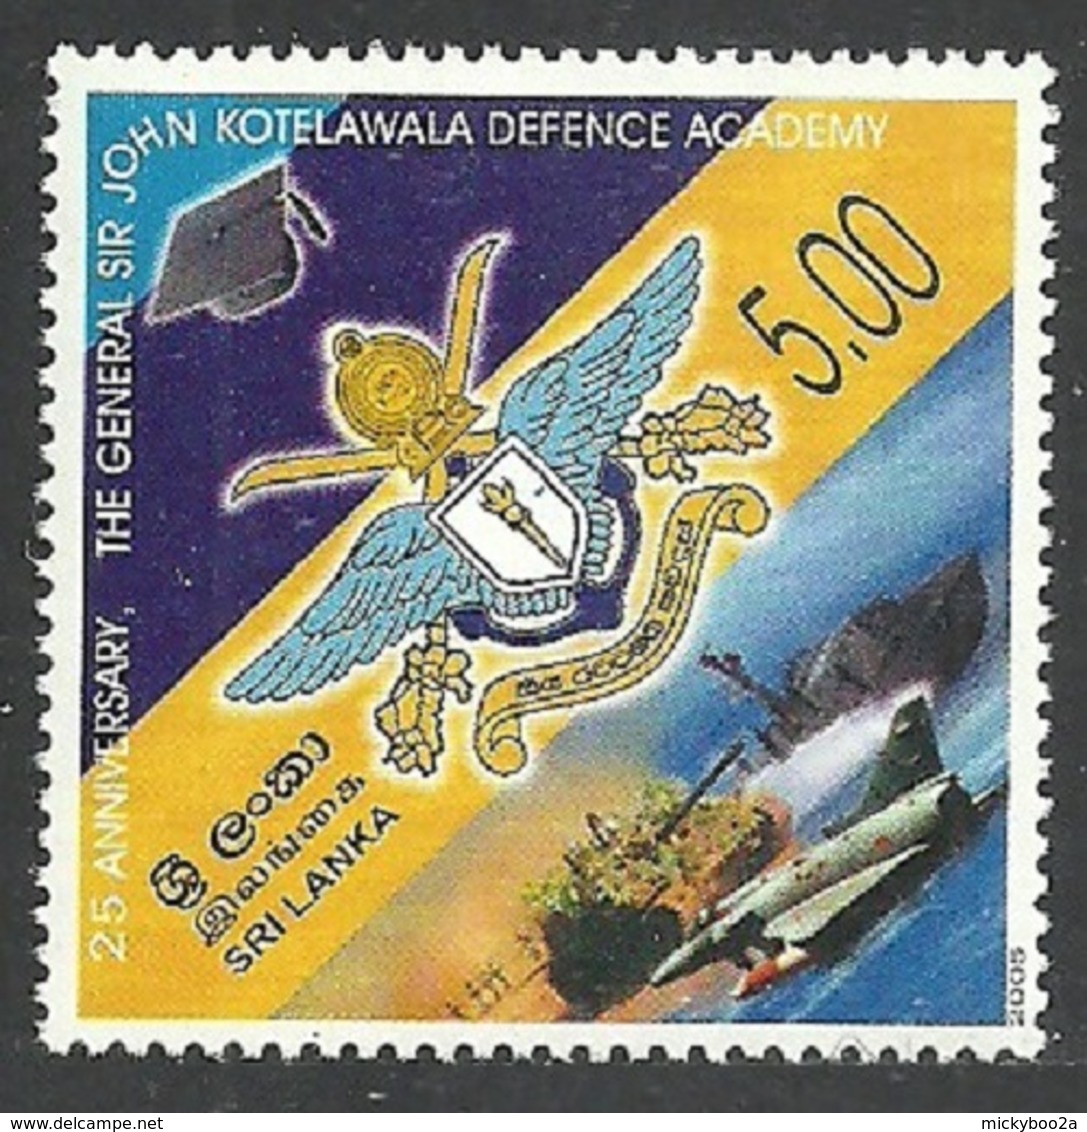 SRI LANKA 2005 MILITARY DEFENCE ACADEMY TANKS AIRCRAFT SHIPS SET MNH - Sri Lanka (Ceylon) (1948-...)